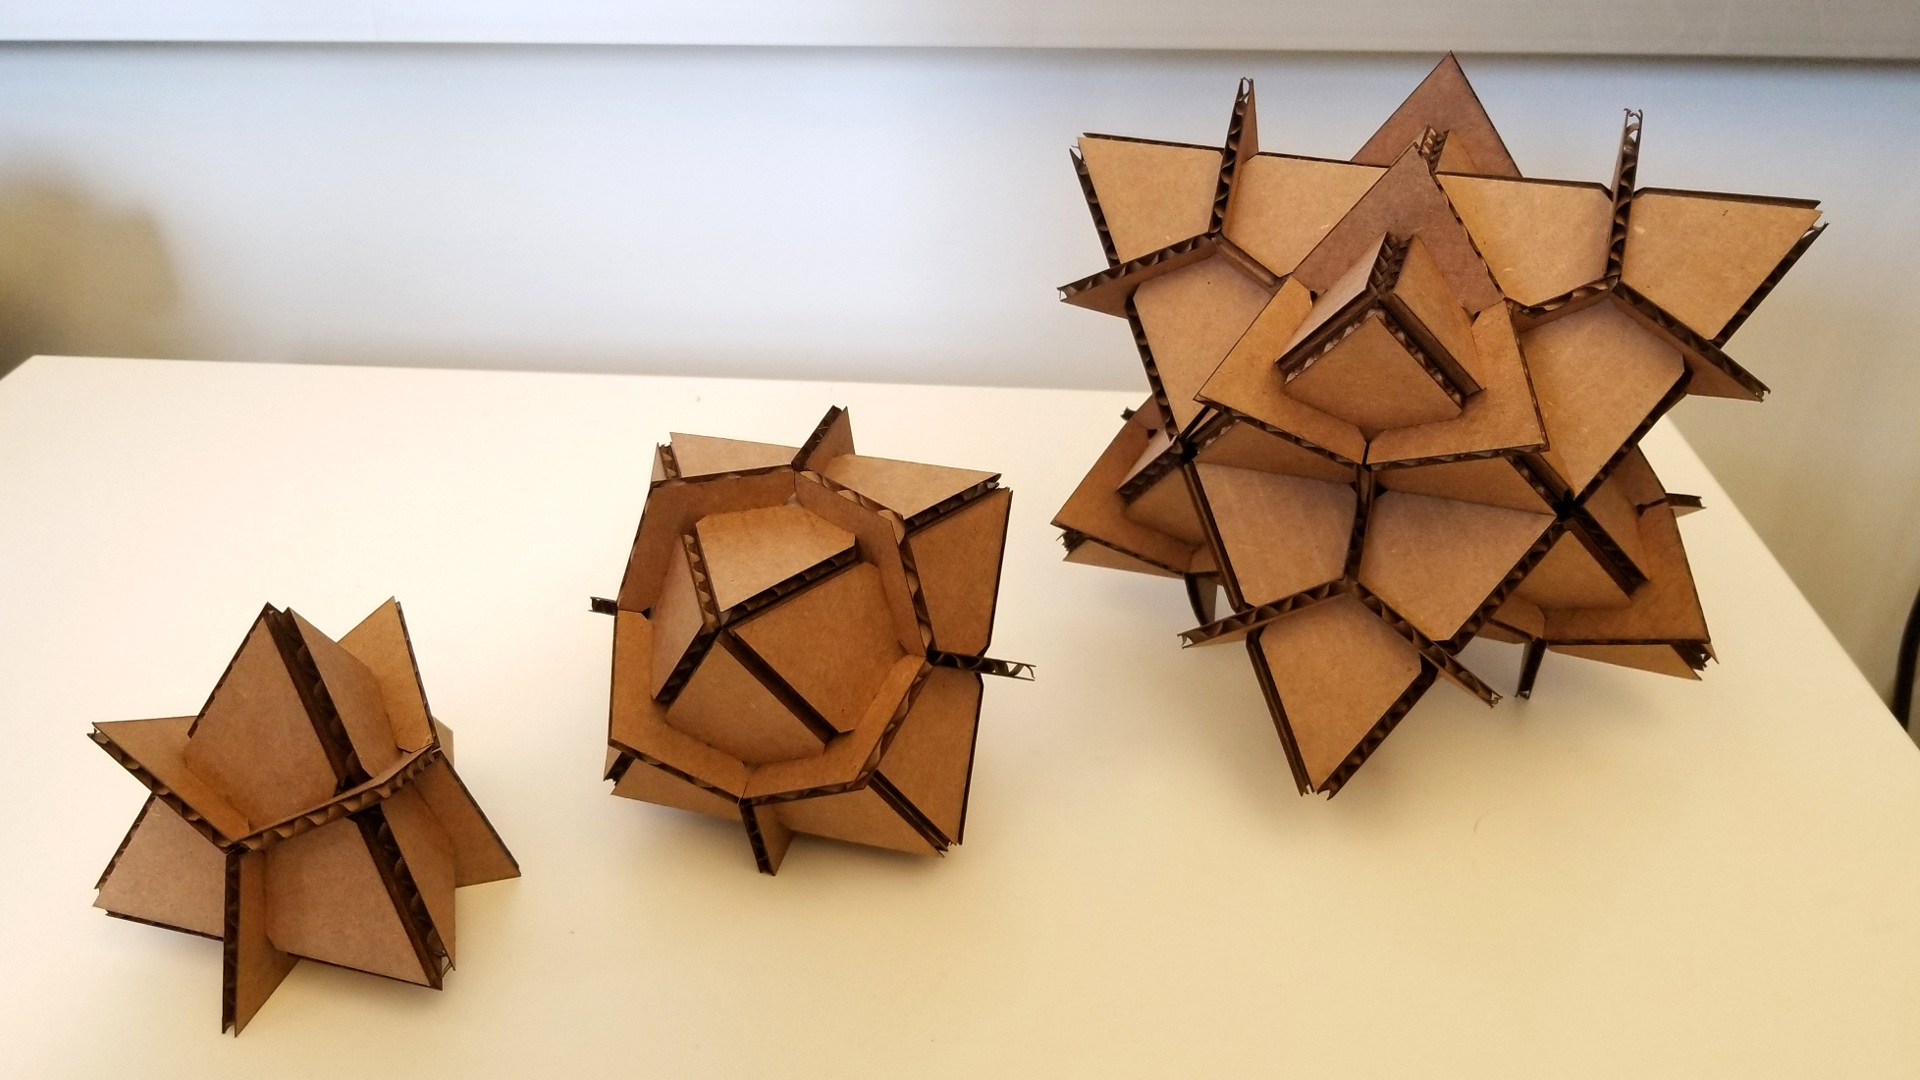 all assembled polyhedra